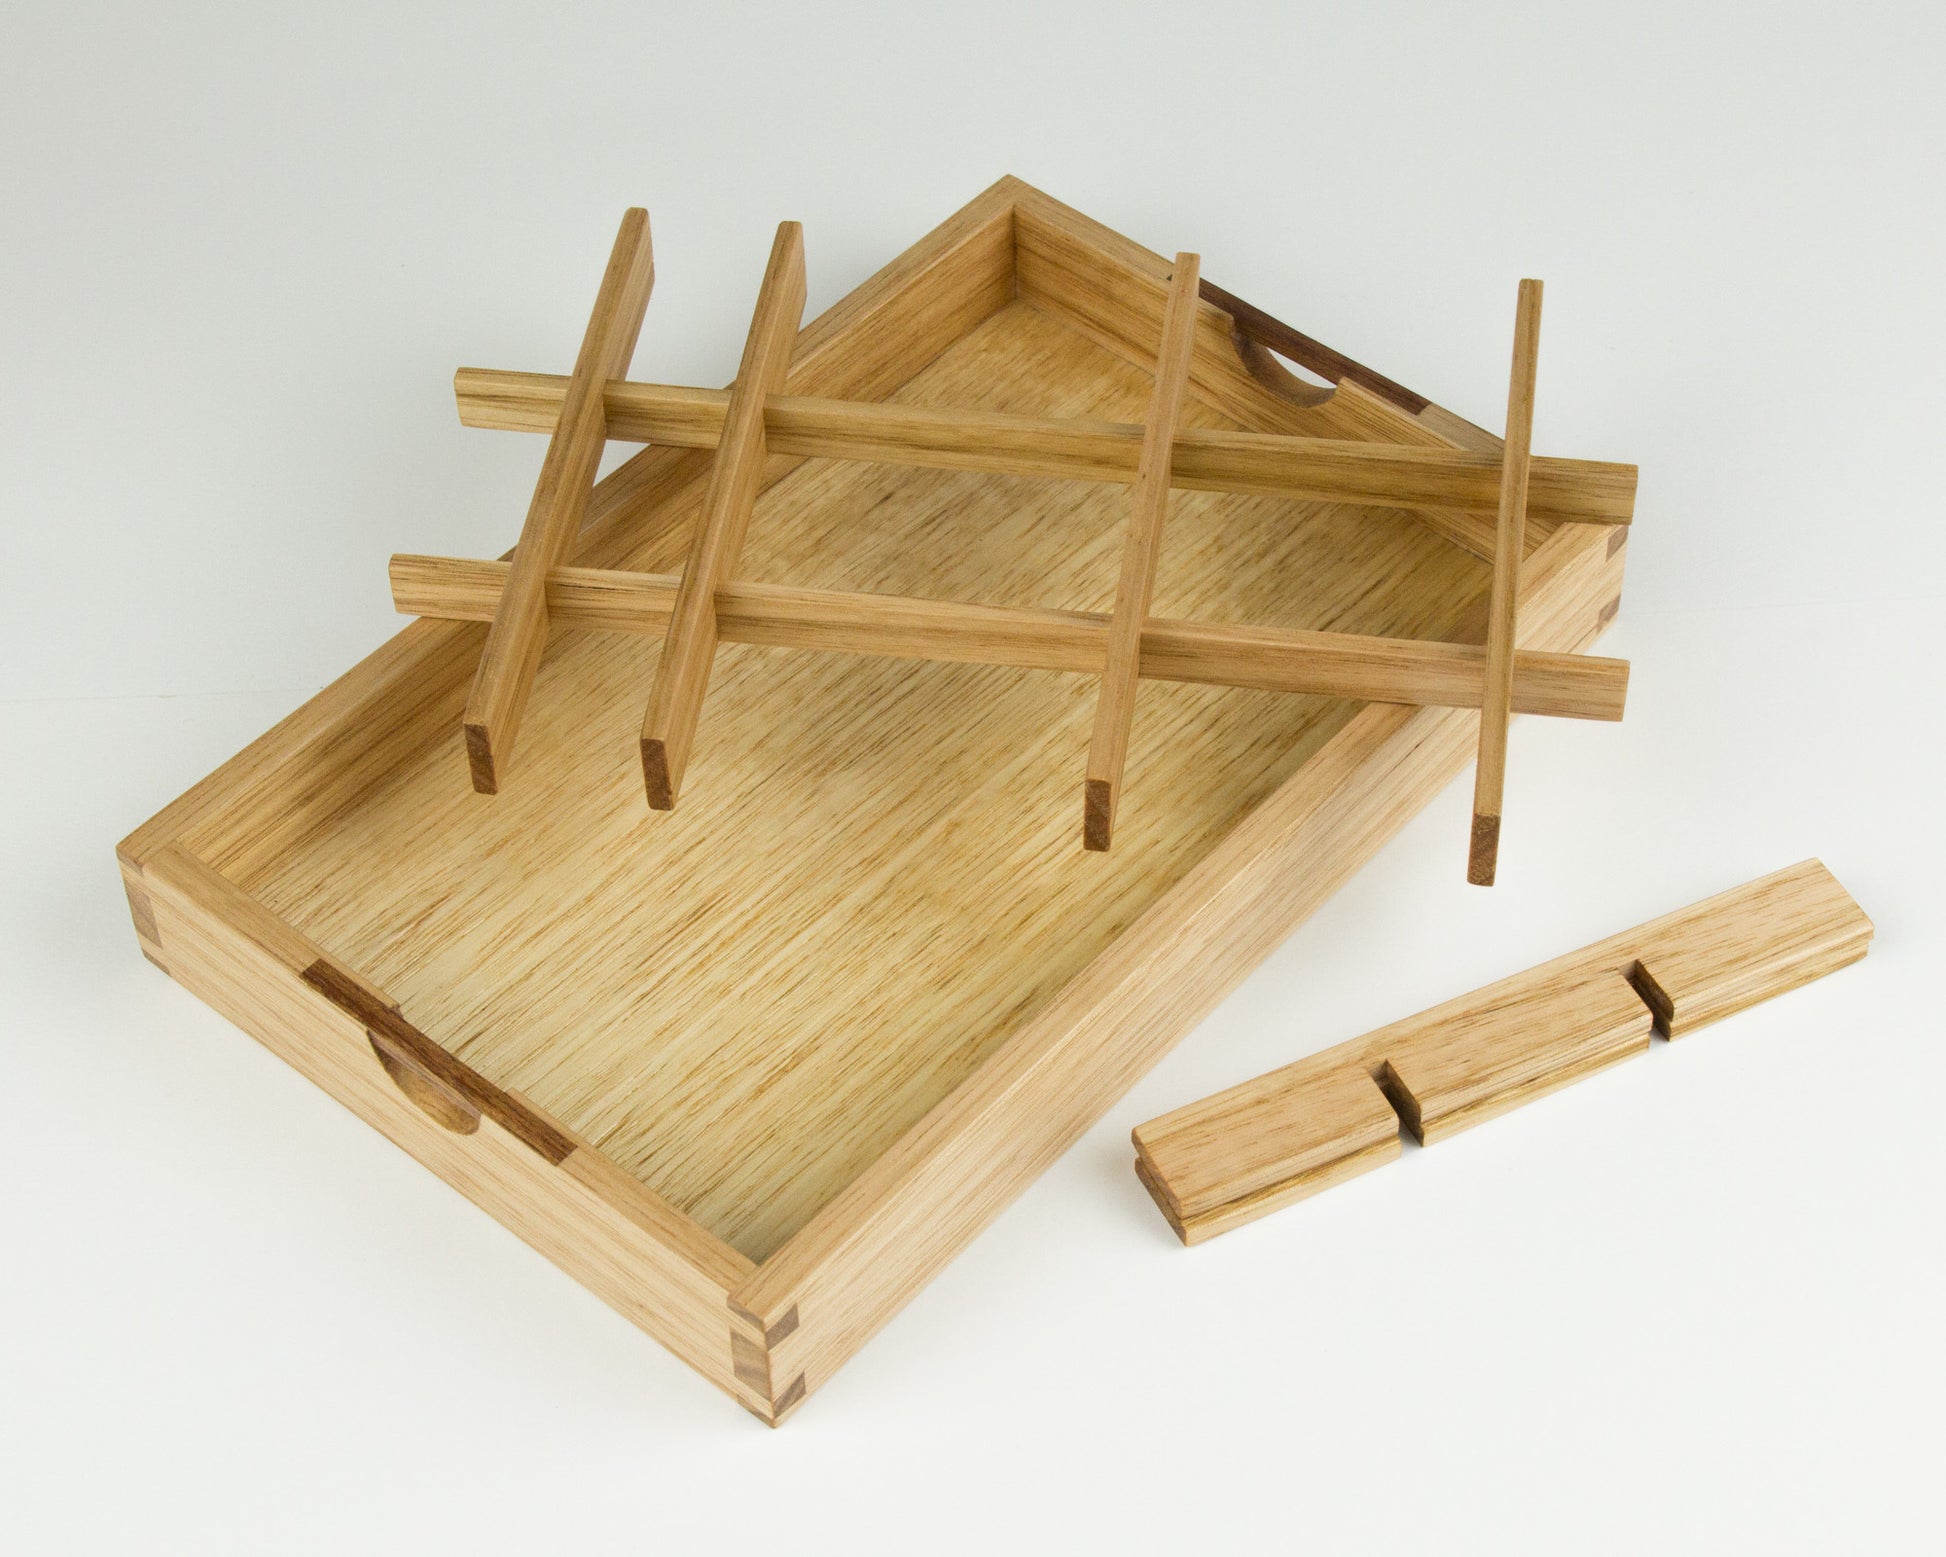 Wooden jewellery box tray handcrafted from Tasmanian Oak